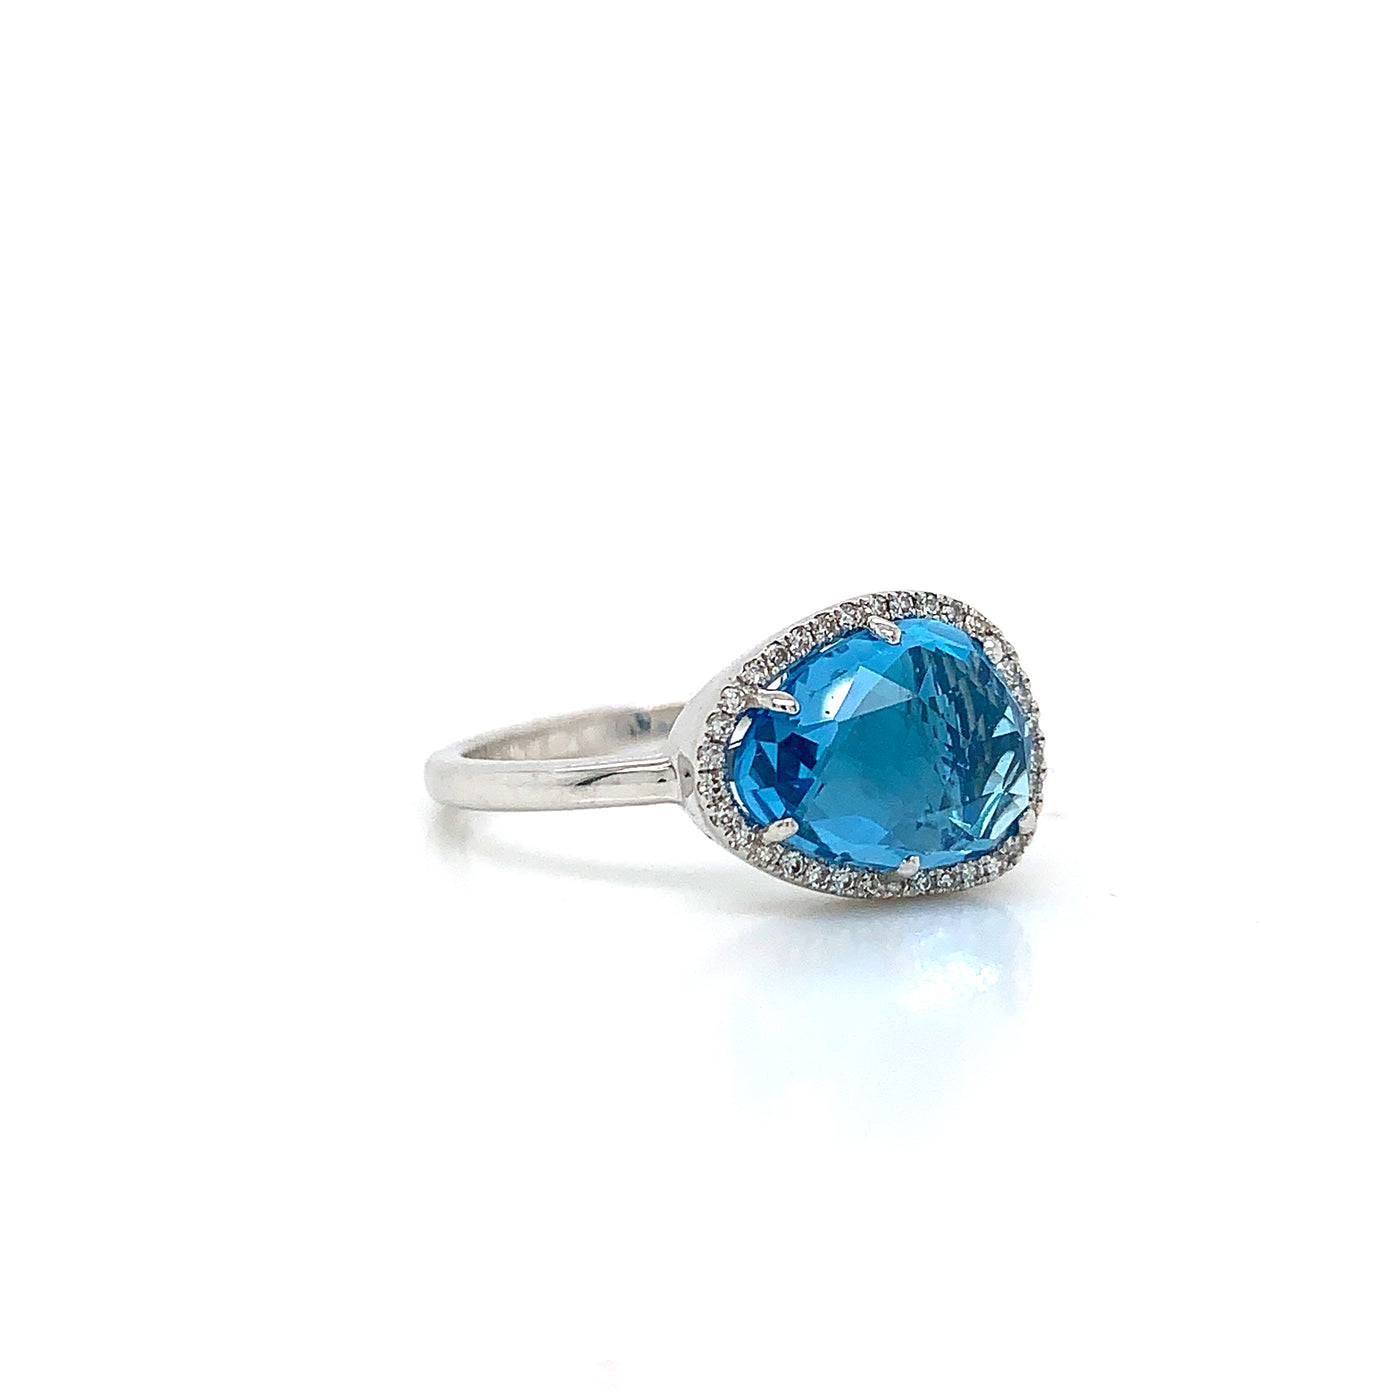 Blue Topaz with diamond halo Ring